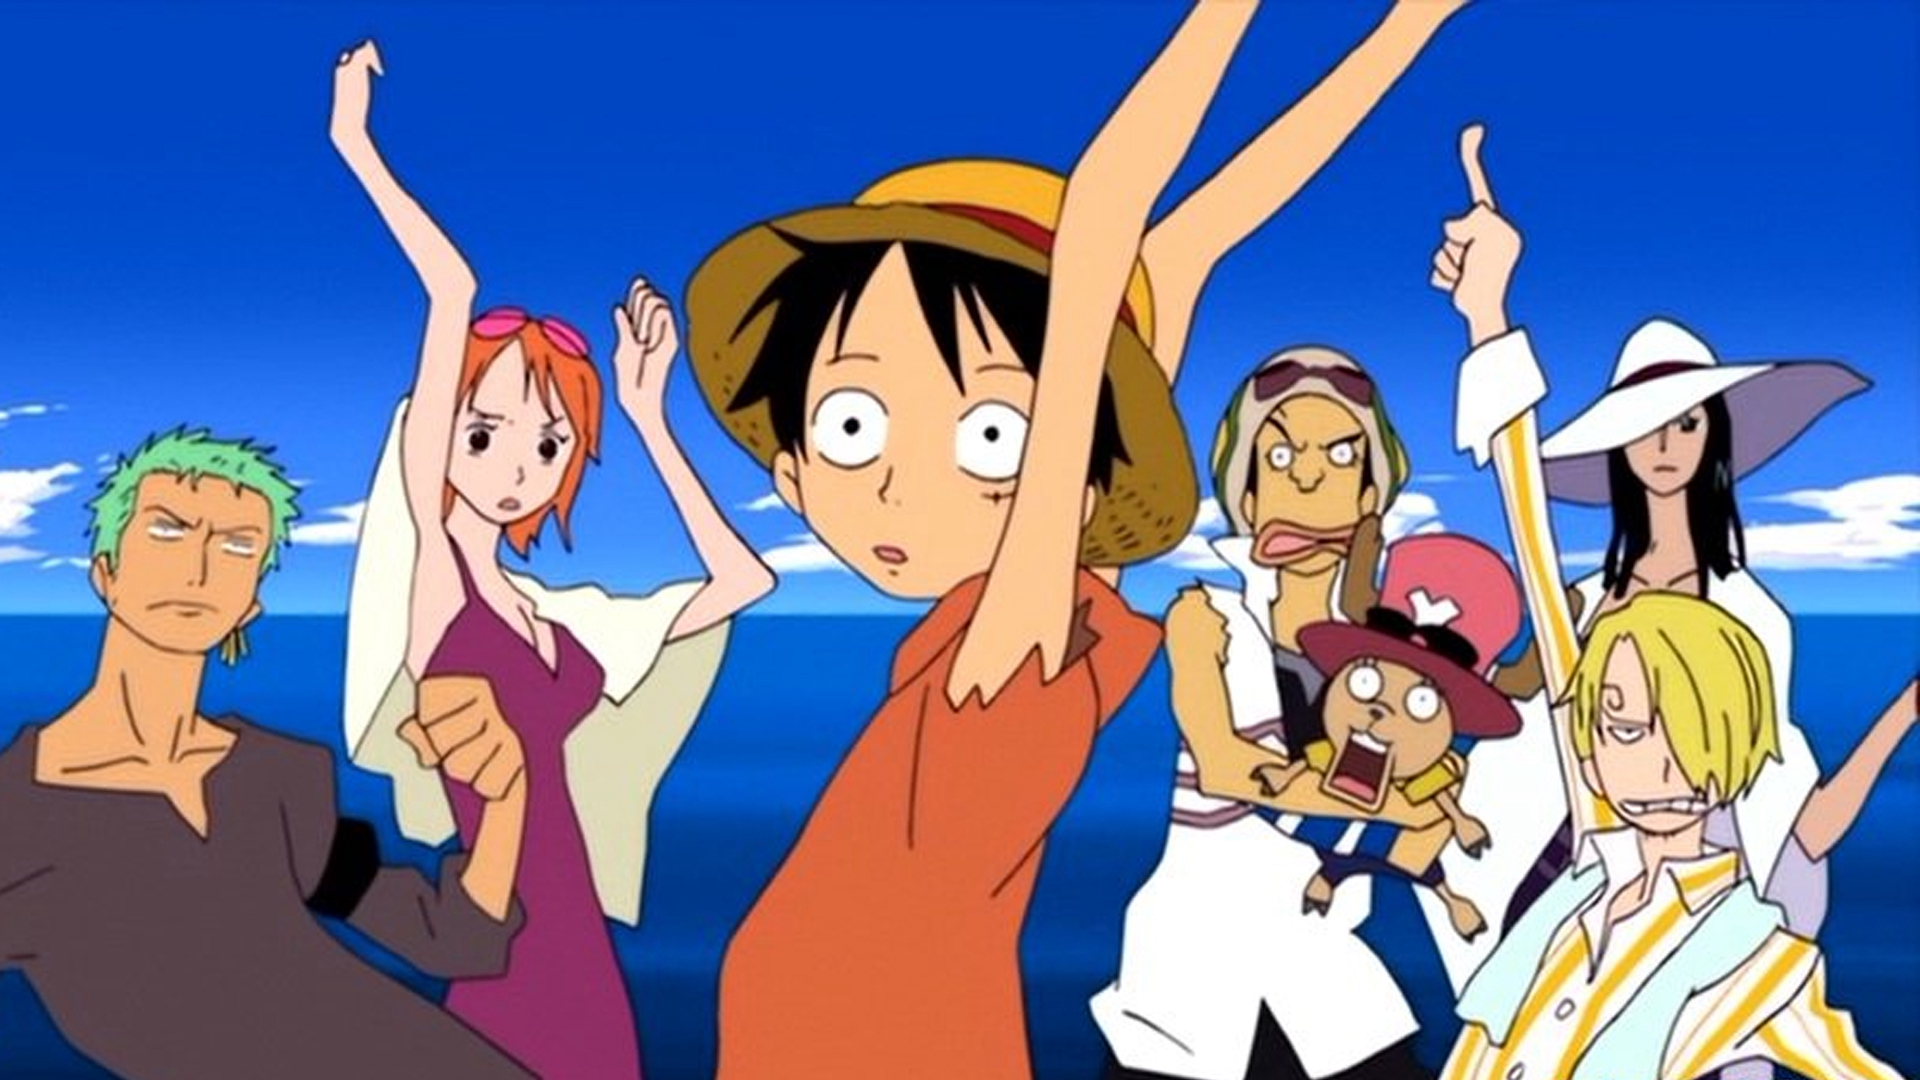 Banner Phim One Piece: Episode of Alabaster - Sabaku no Ojou to Kaizoku Tachi (One Piece: Episode of Alabaster - Sabaku no Ojou to Kaizoku Tachi)